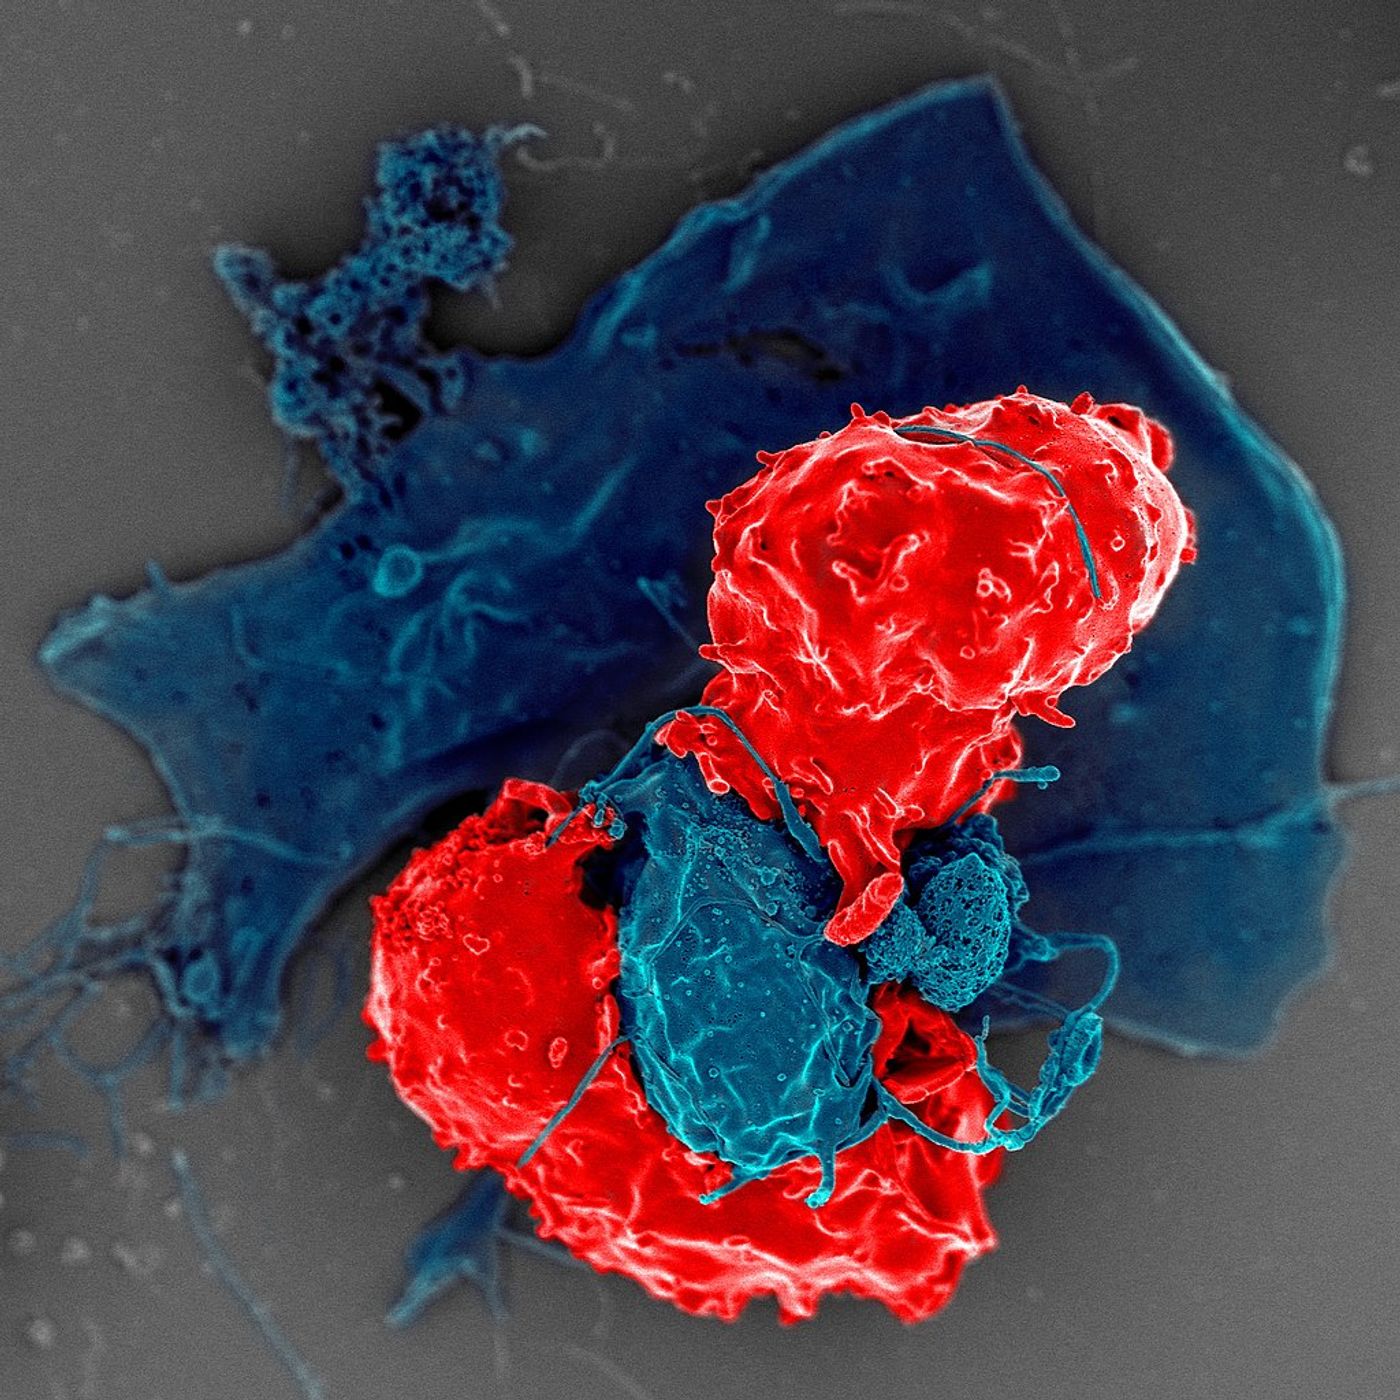 regulatory T cell